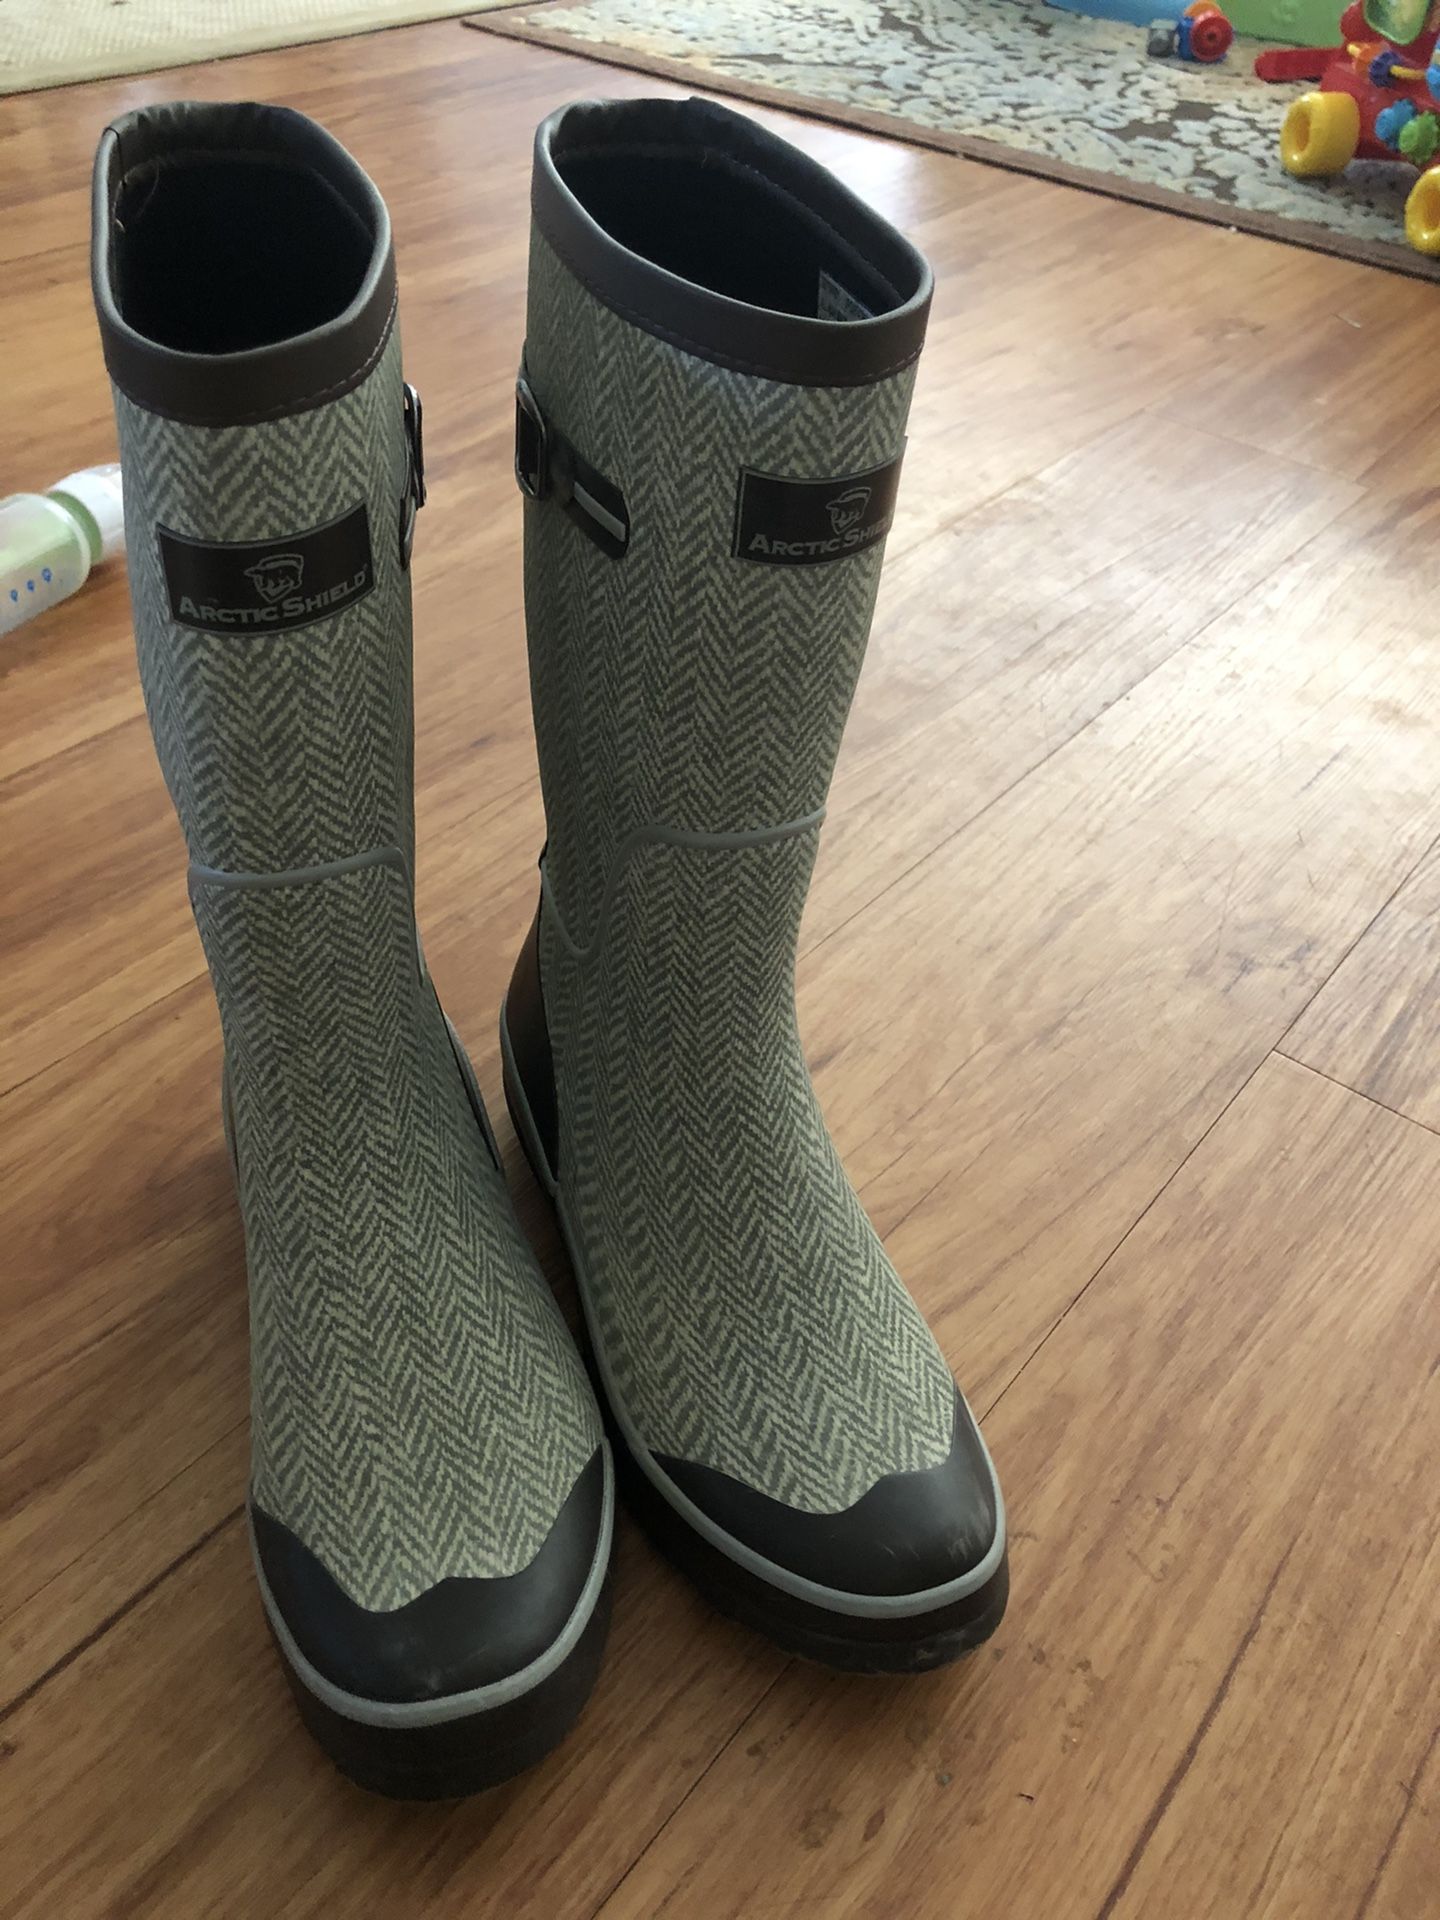 Women’s rain and winter boots